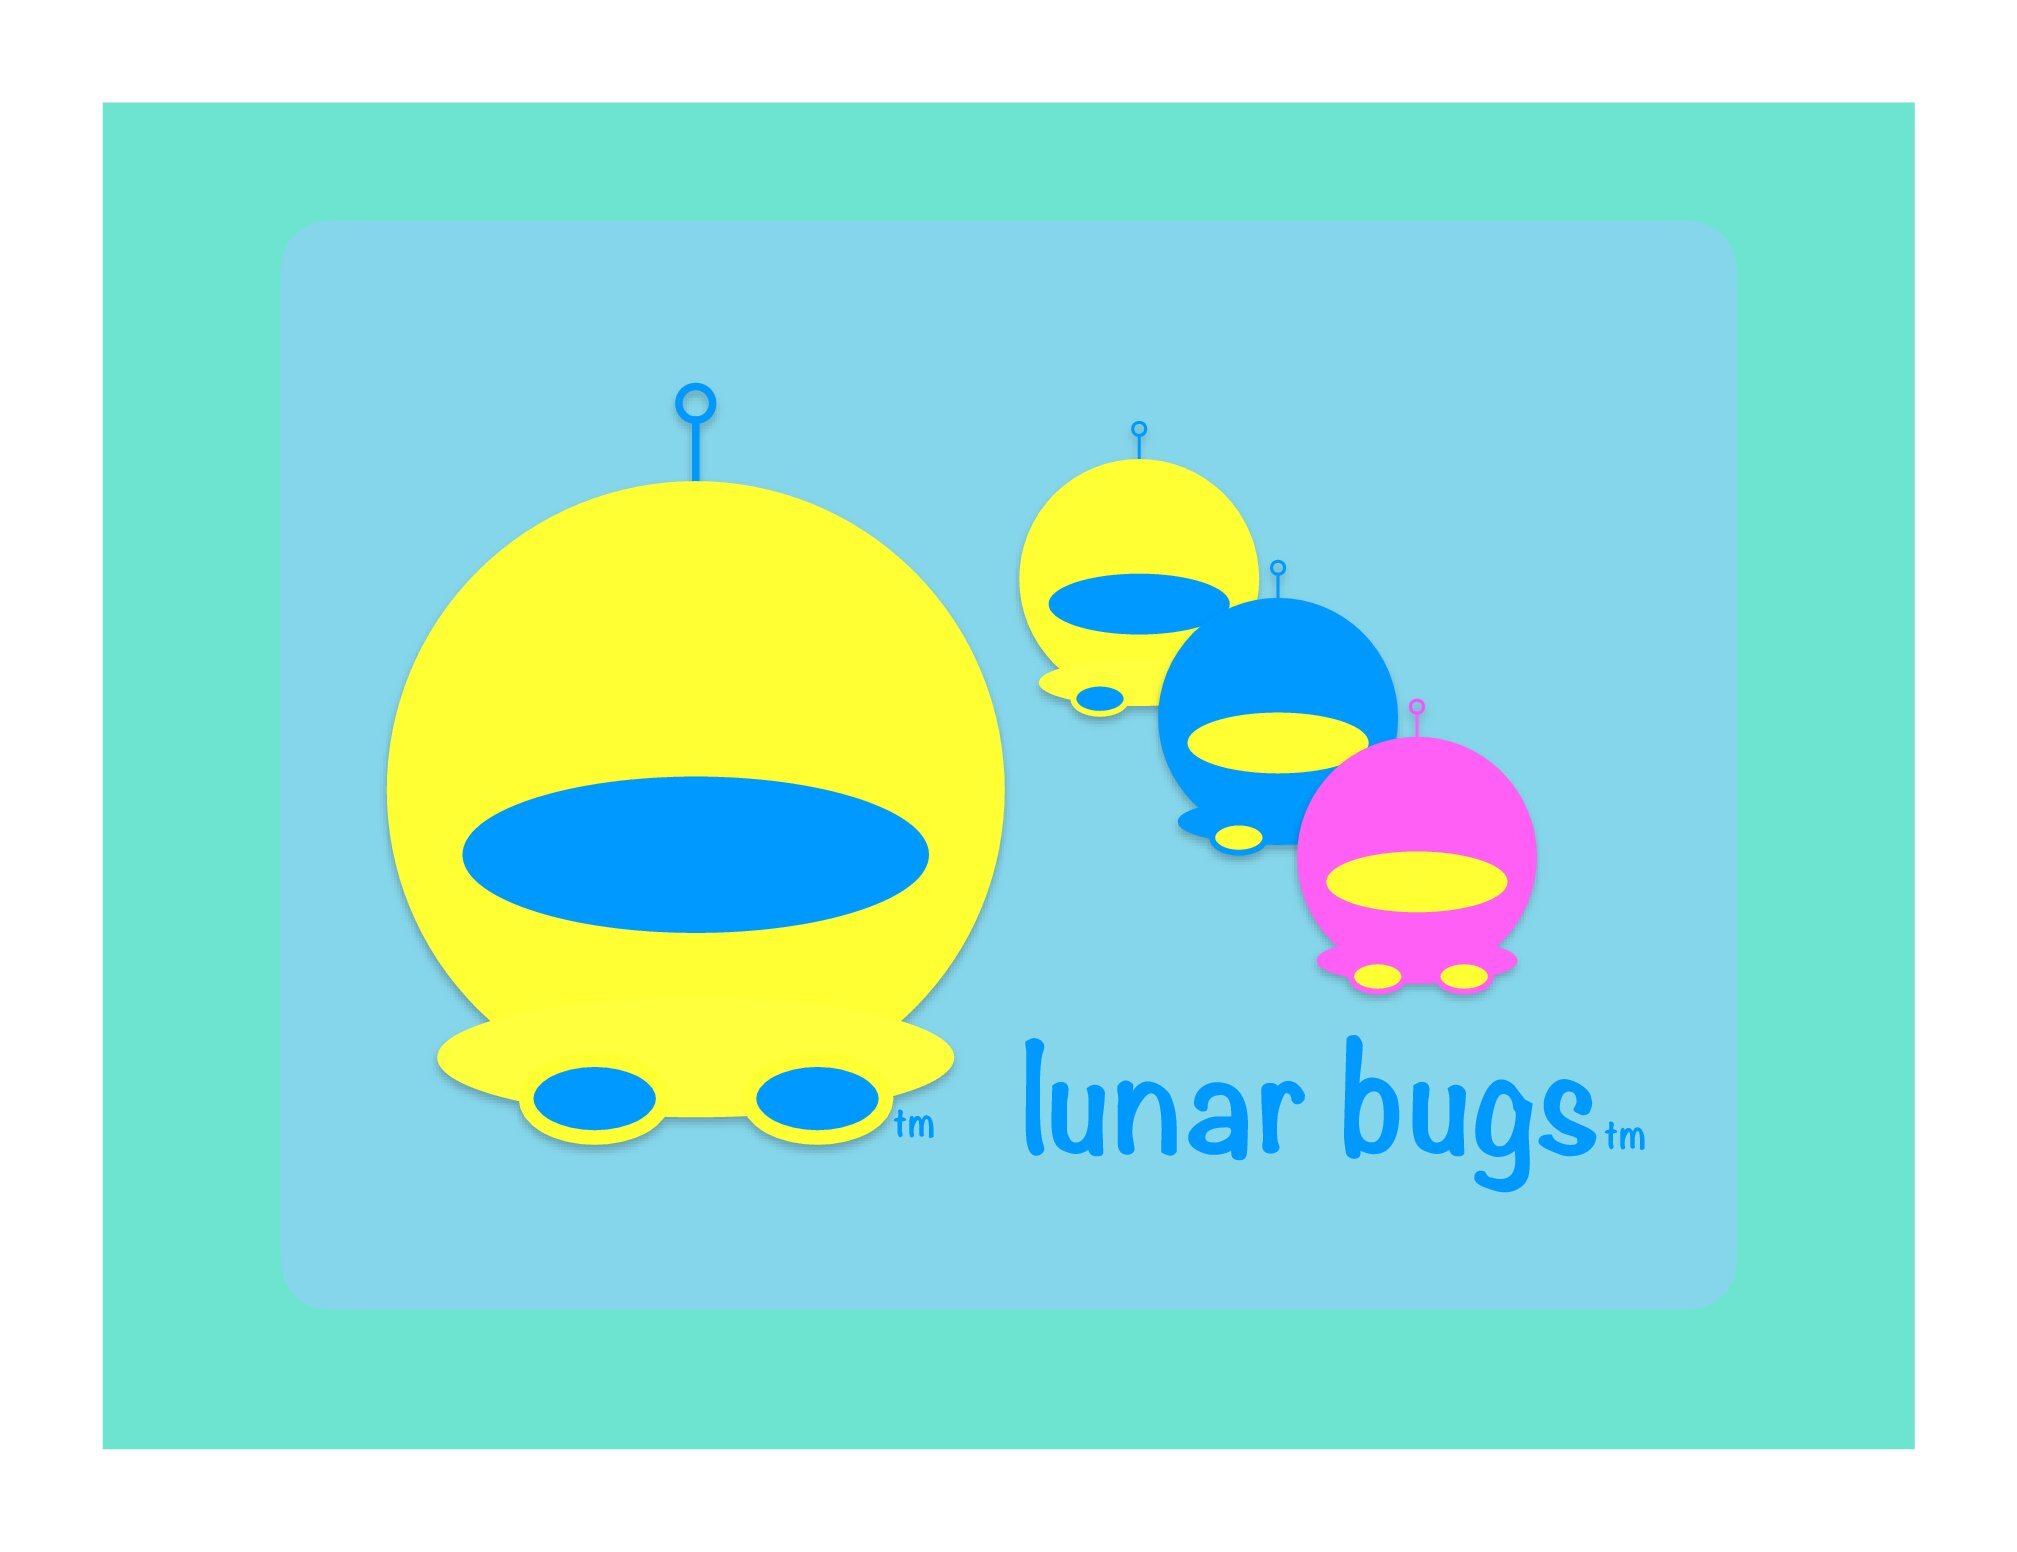 image of multiple lunar bugs logo